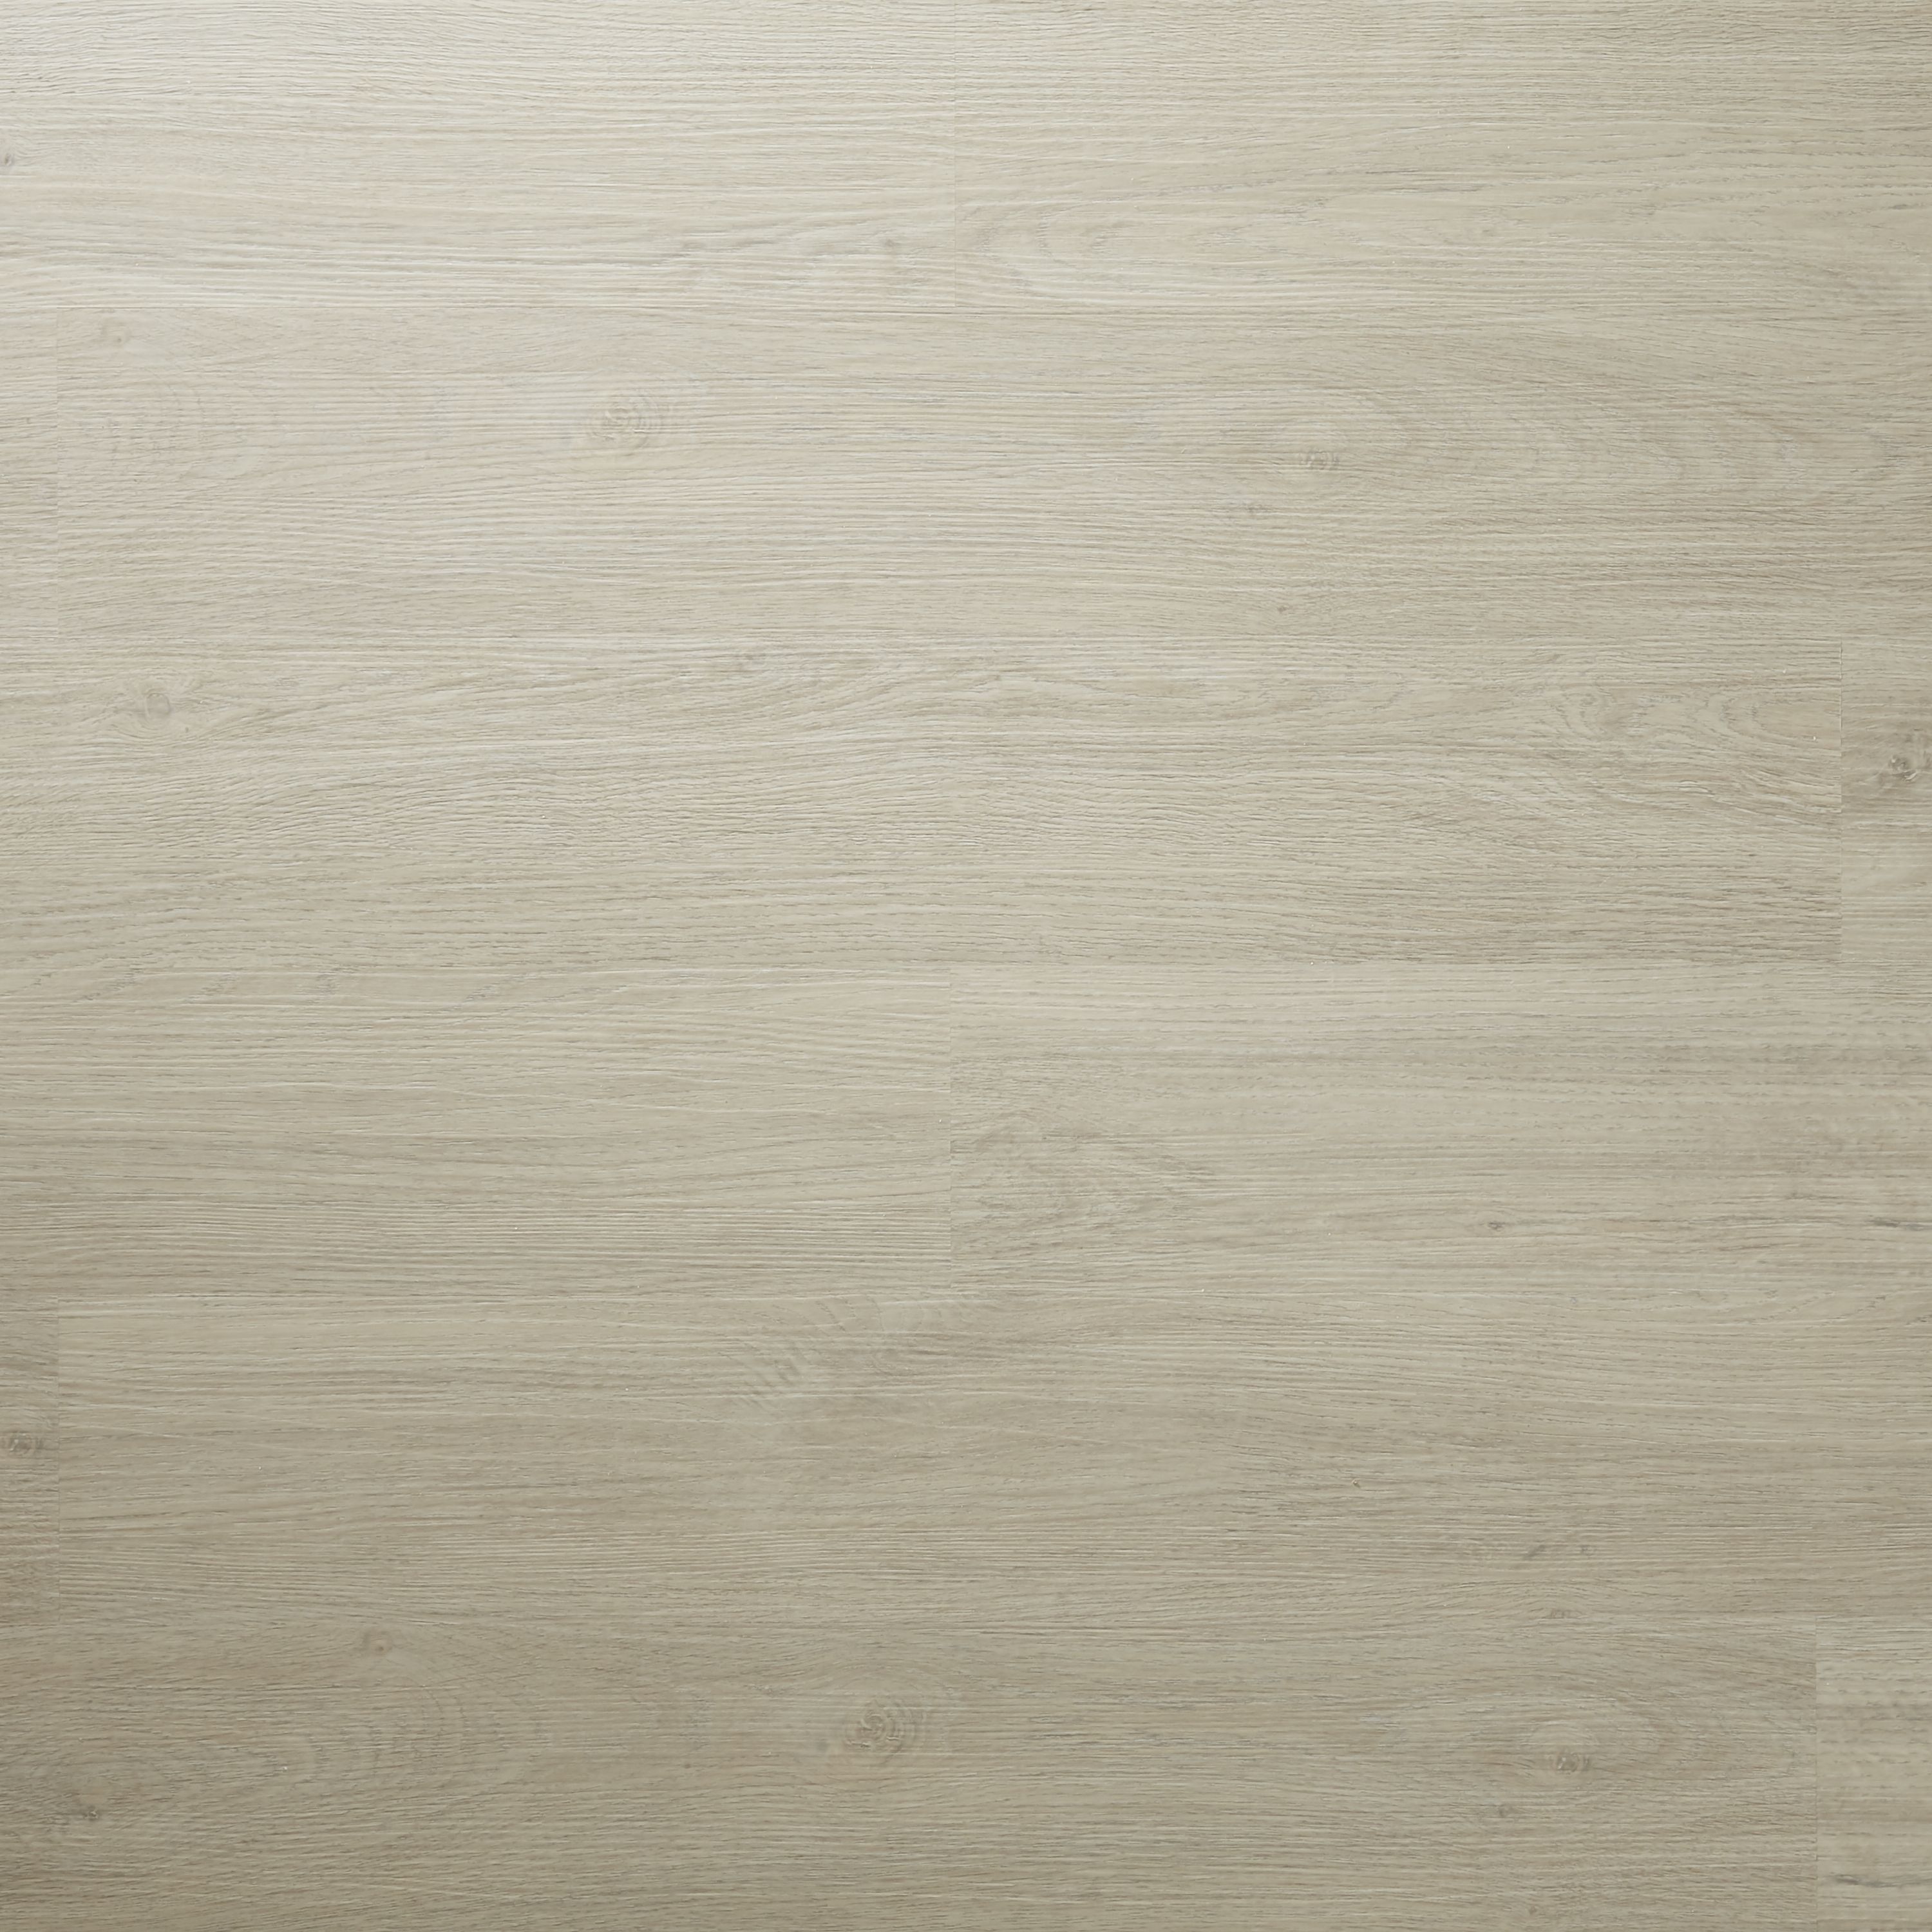 Baila Greige Polyvinyl chloride (PVC) Wood effect Click vinyl Flooring Sample